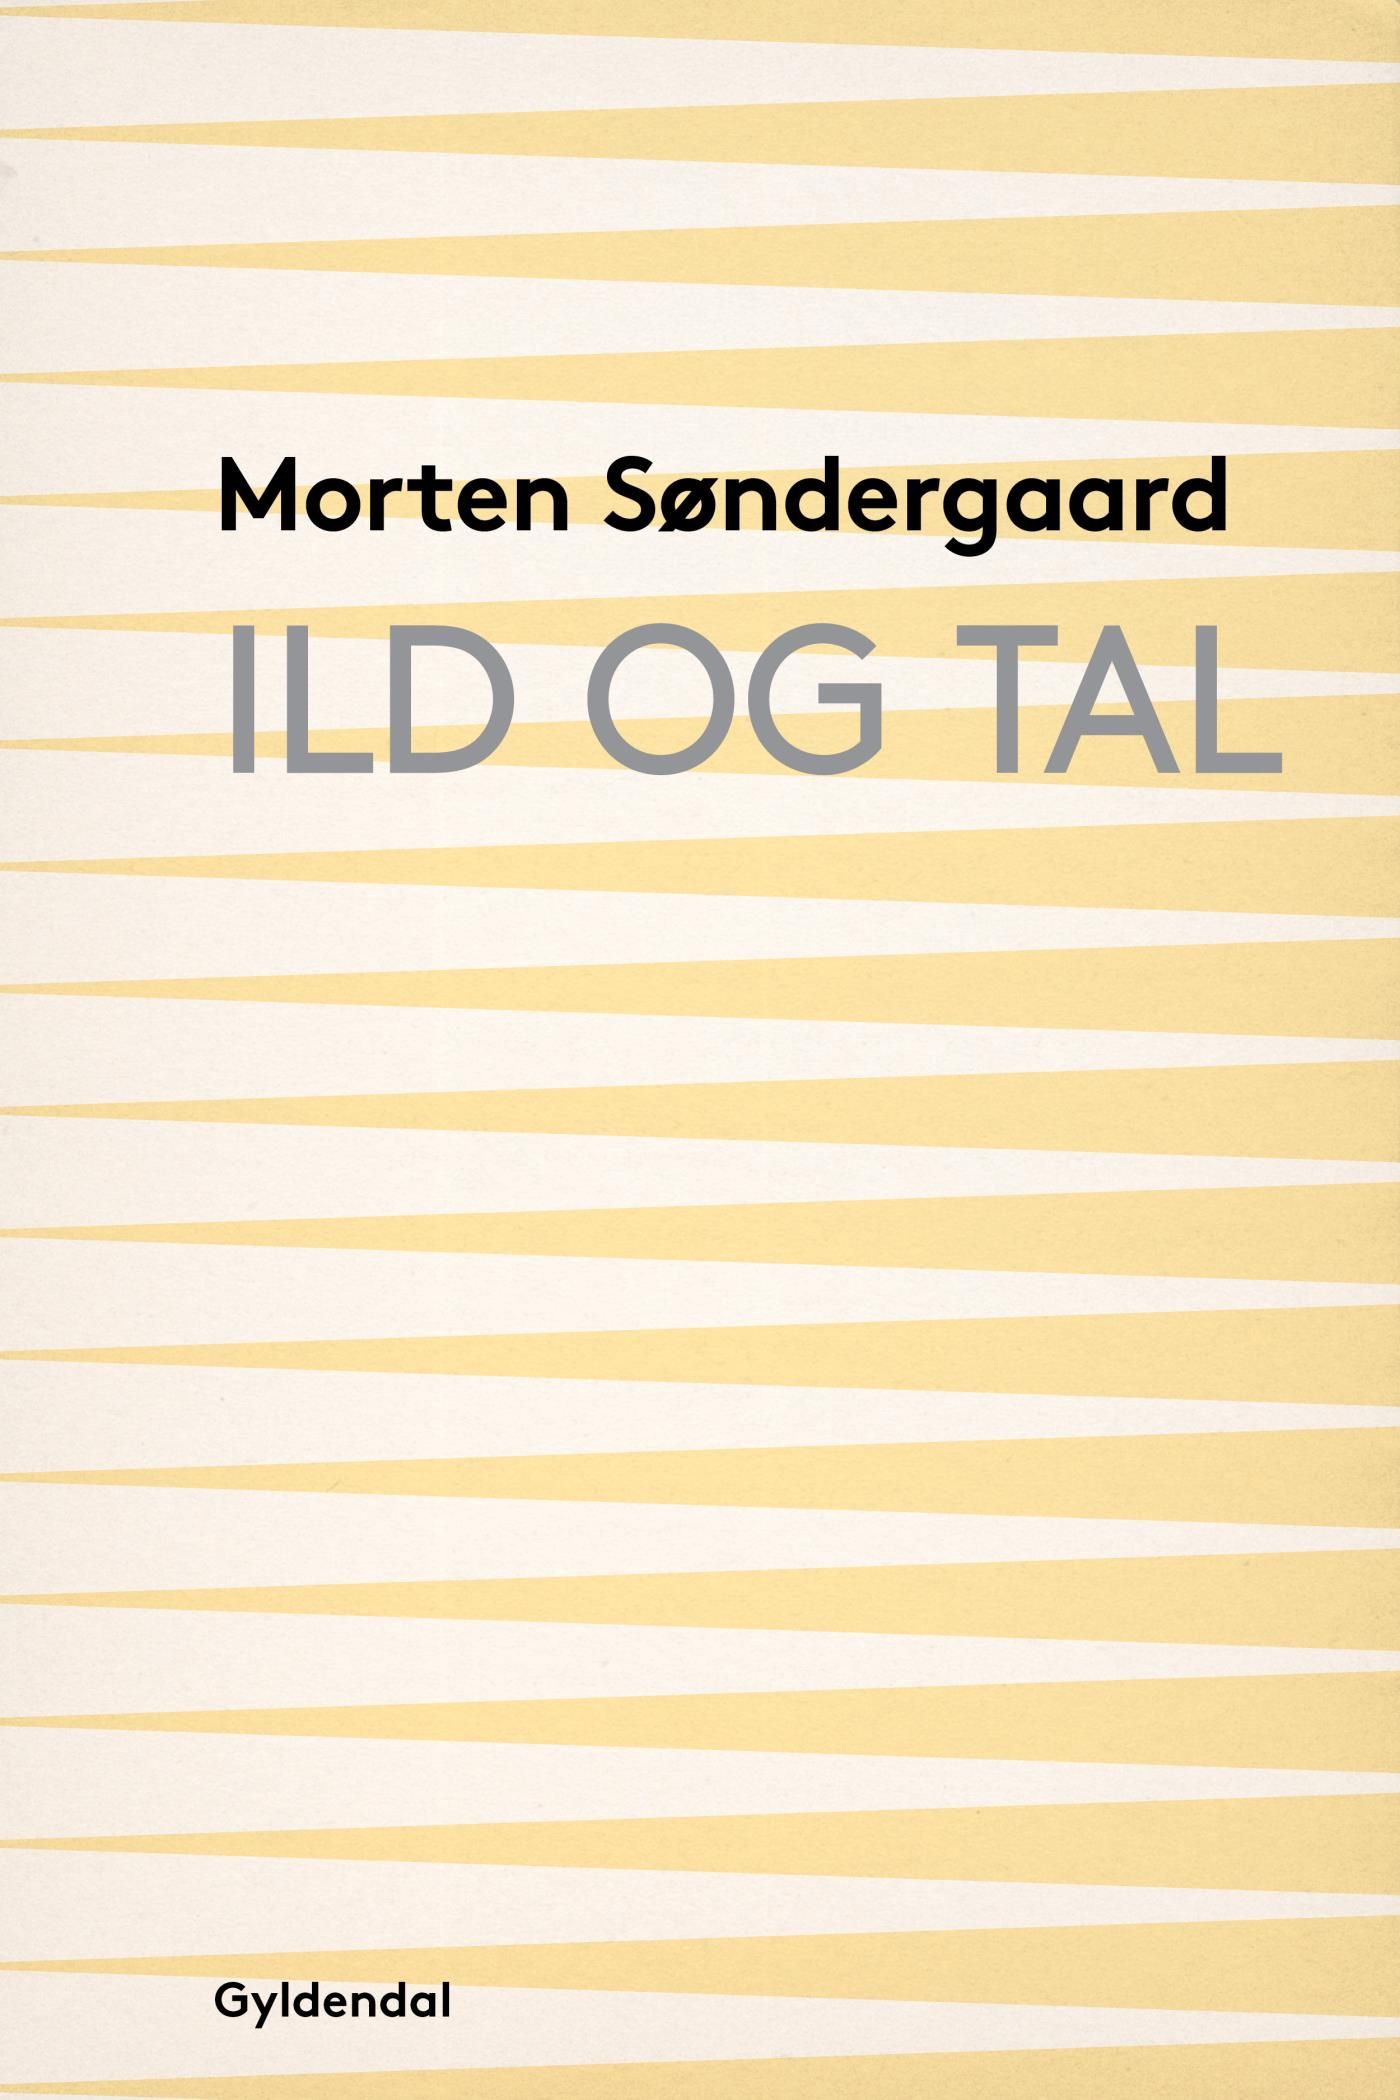 Ild og tal, eBook by Morten Søndergaard